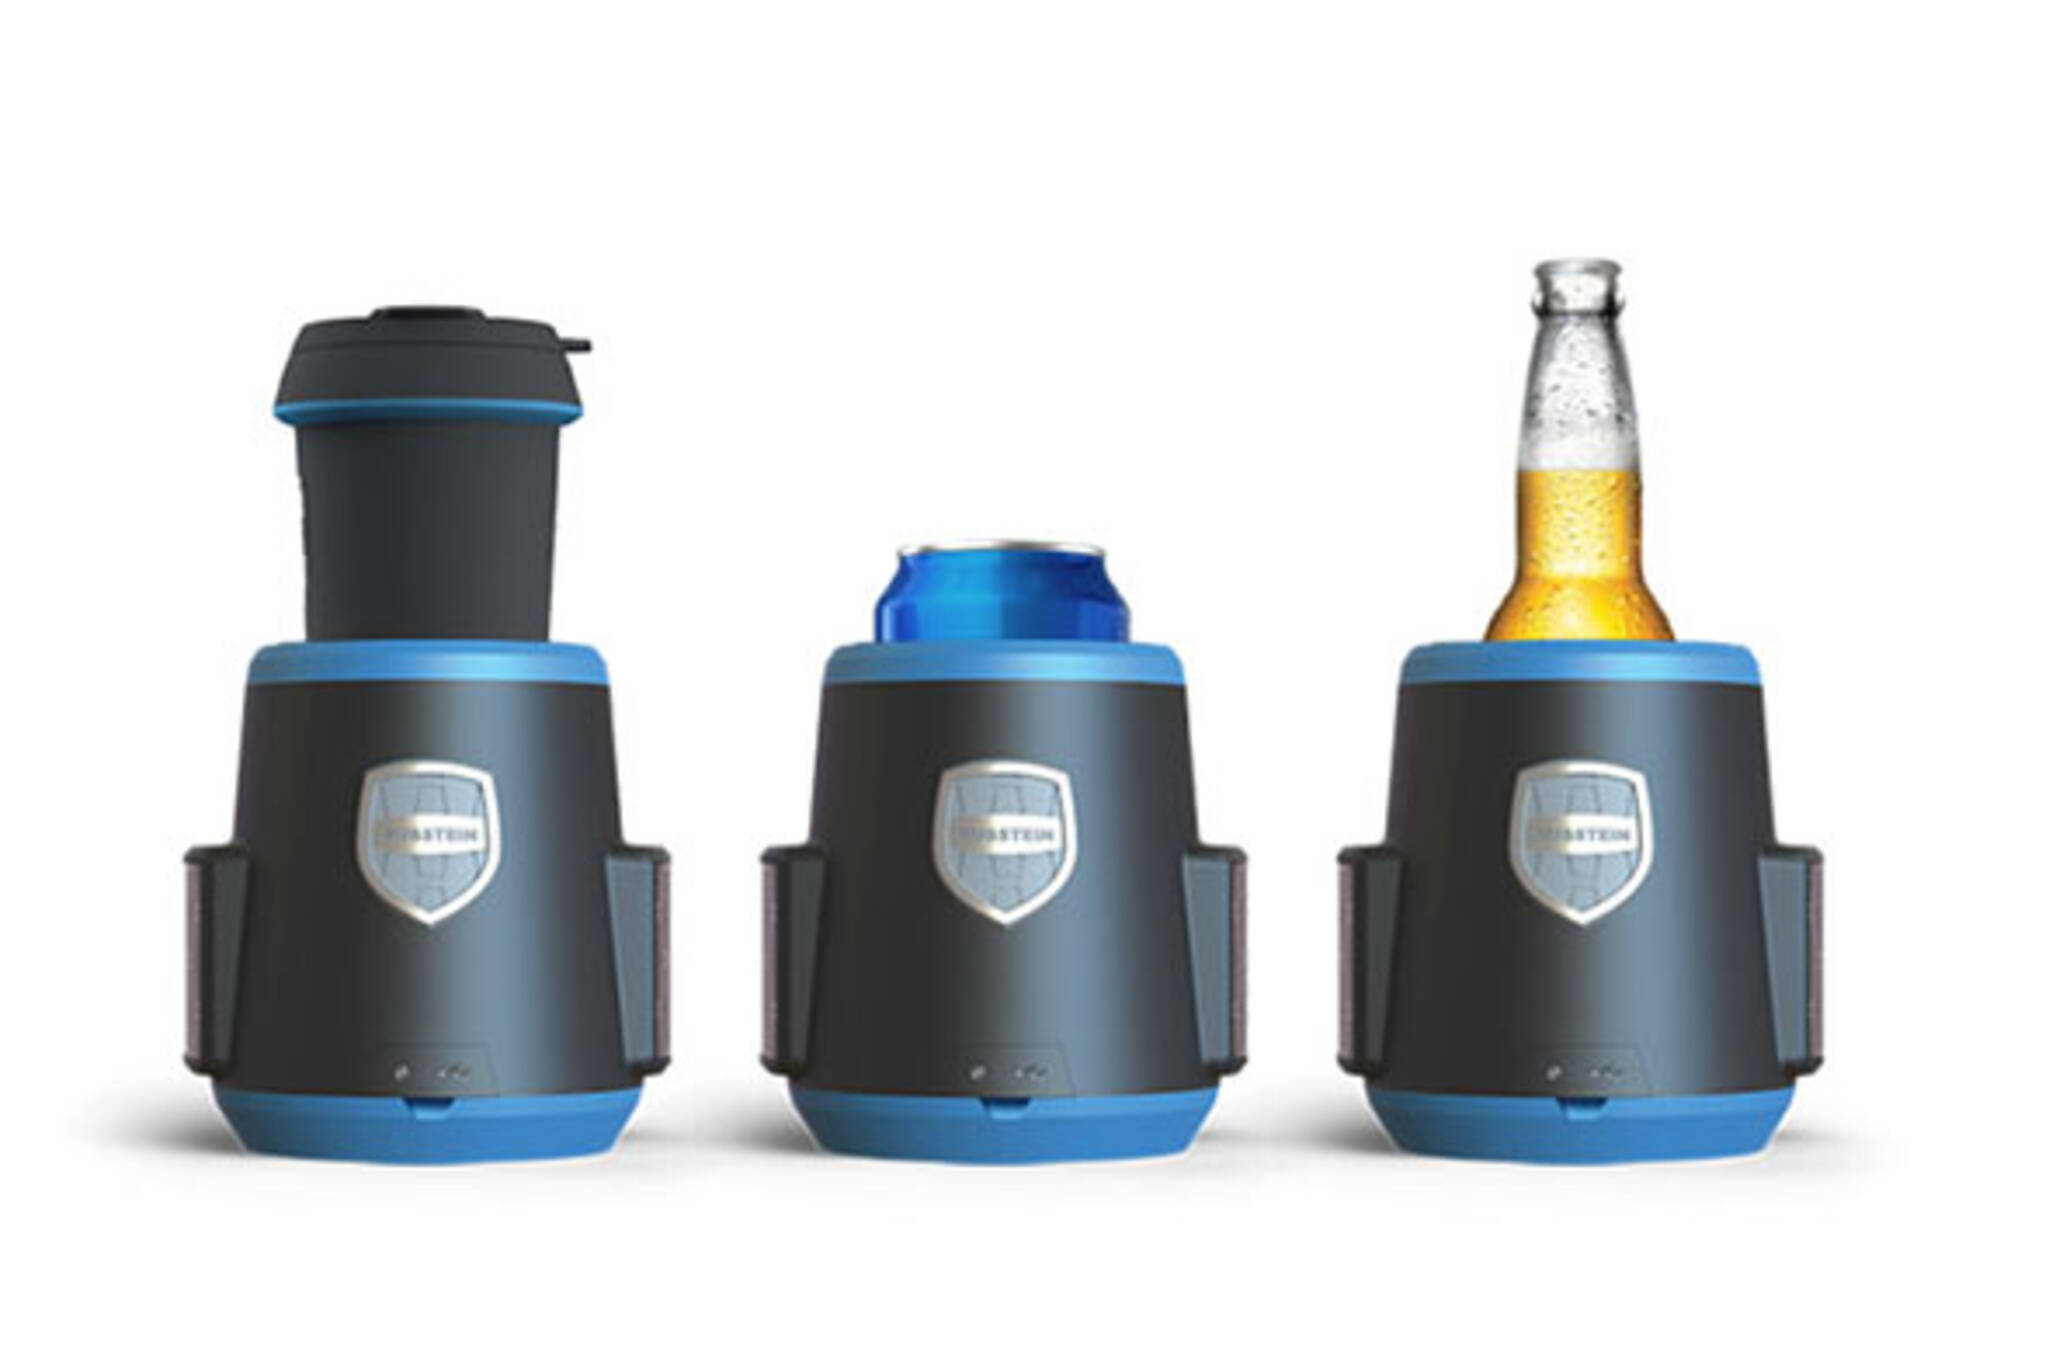 Toronto startup invents Bluetooth speaker beer holder